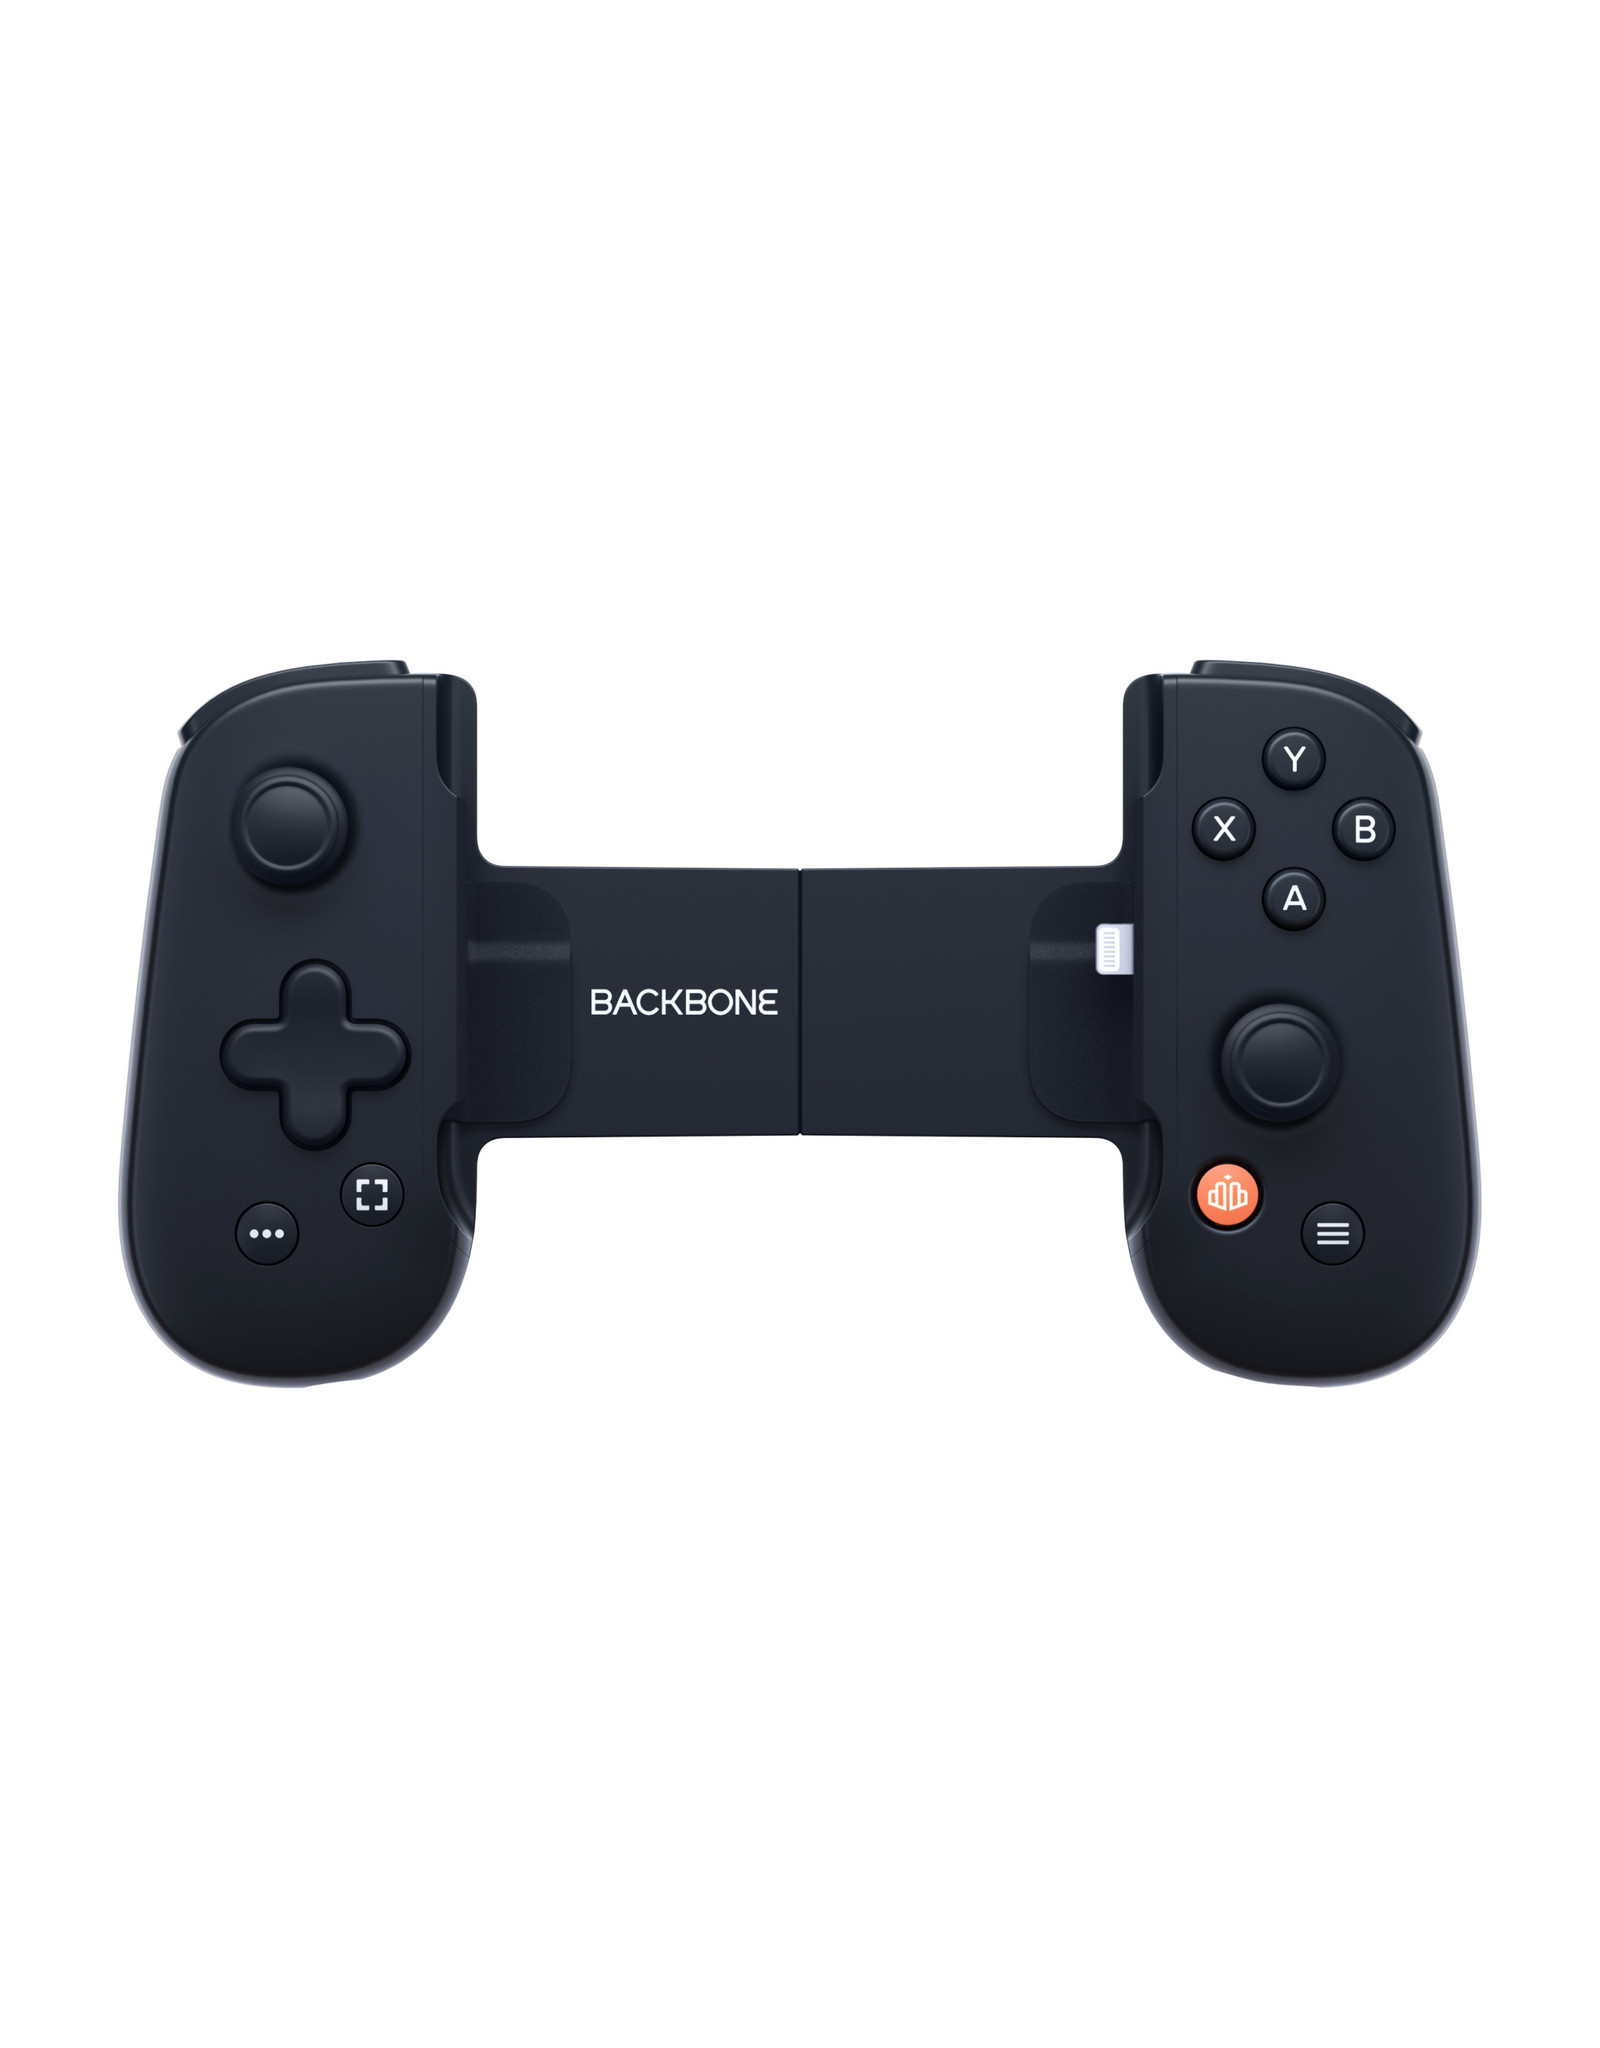 Backbone Backbone One - iPhone Mobile Gaming Controller / Gamepad